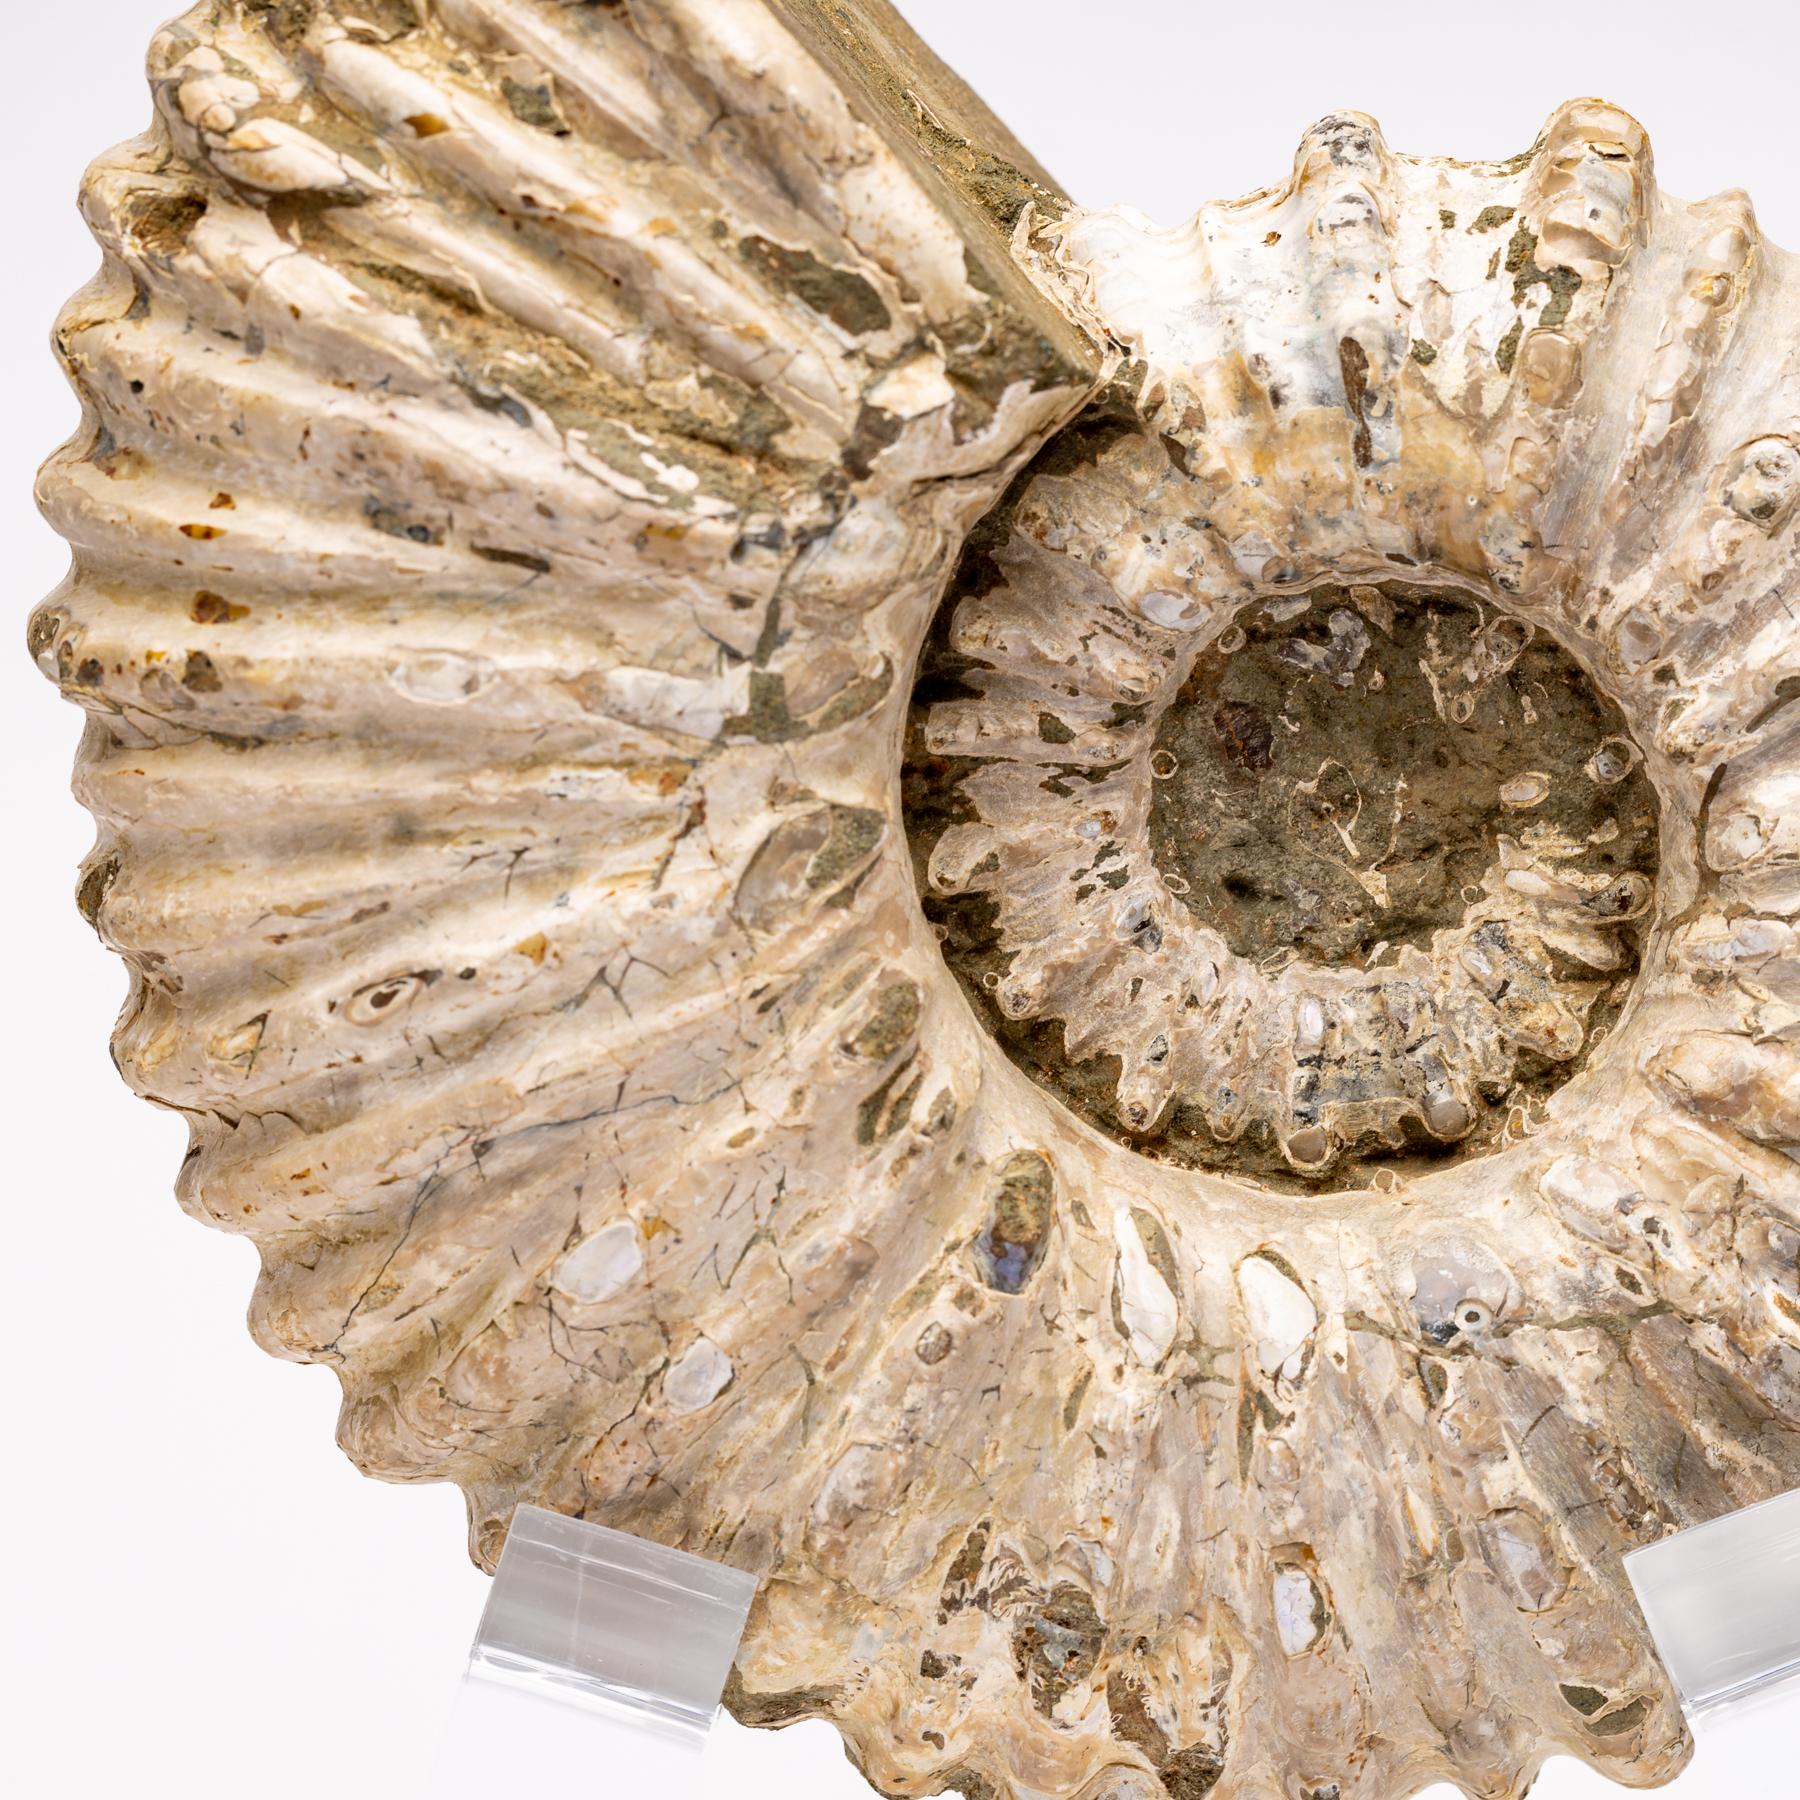 Madagascar Douvilleiceras Ammonite Fossil on Acrylic Base, Cretaceous Period 1